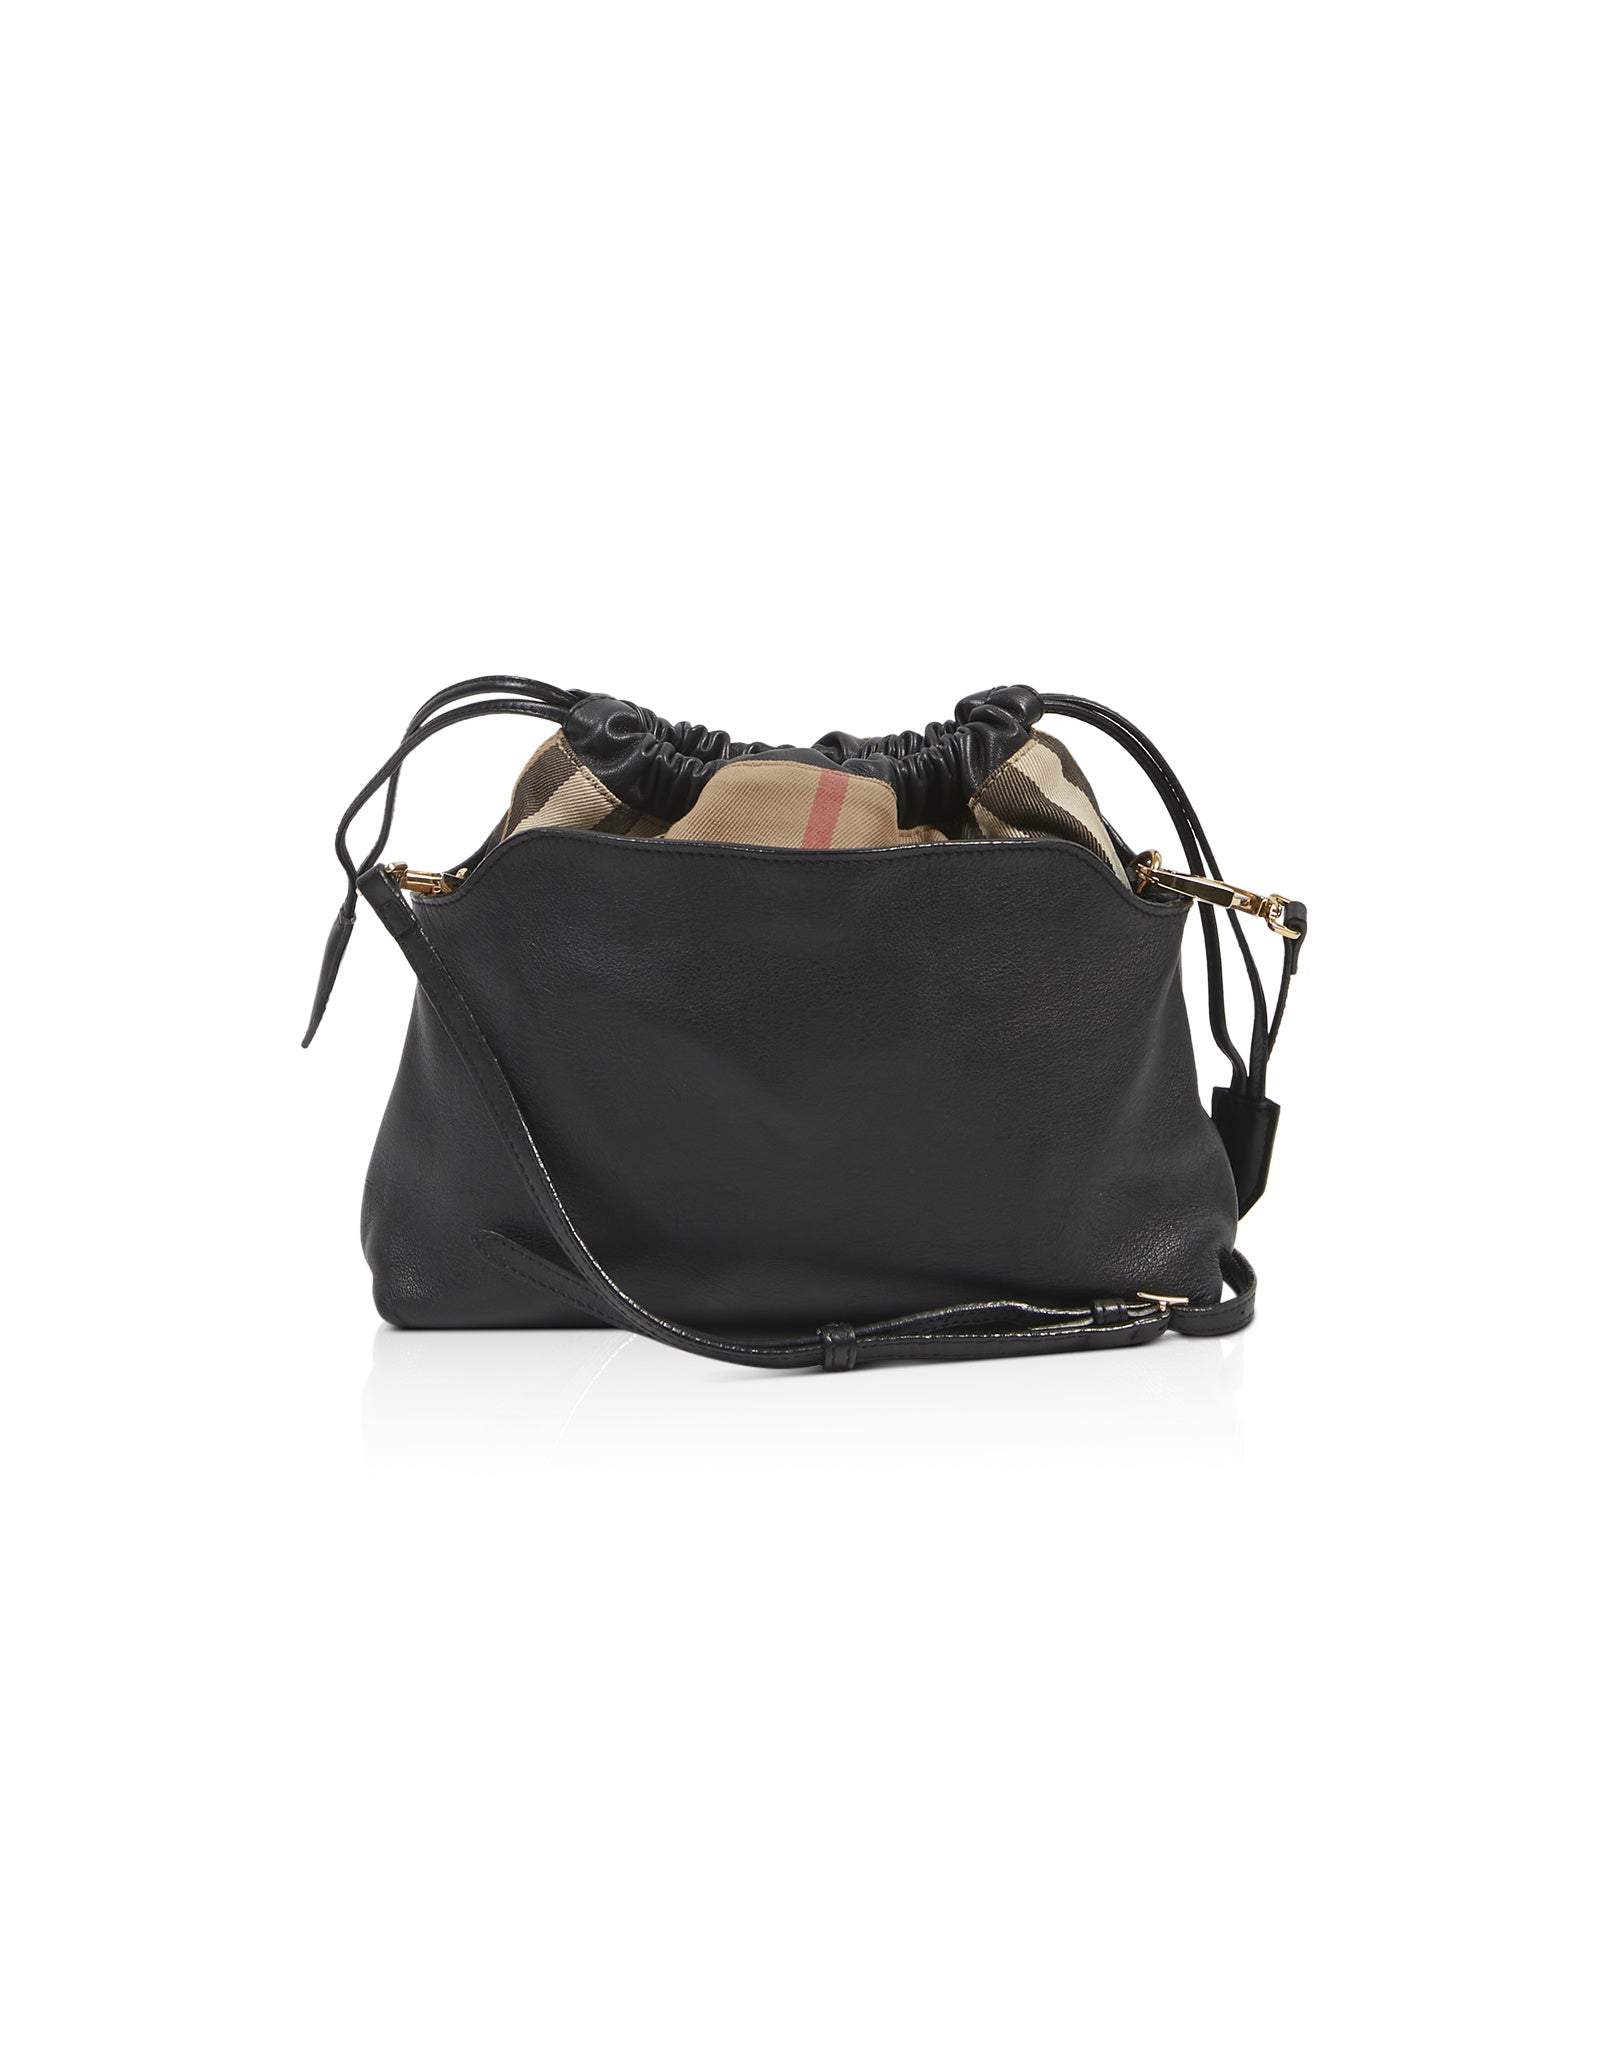 Burberry Black Leather and Check Little Crush Drawstring Shoulder Bag